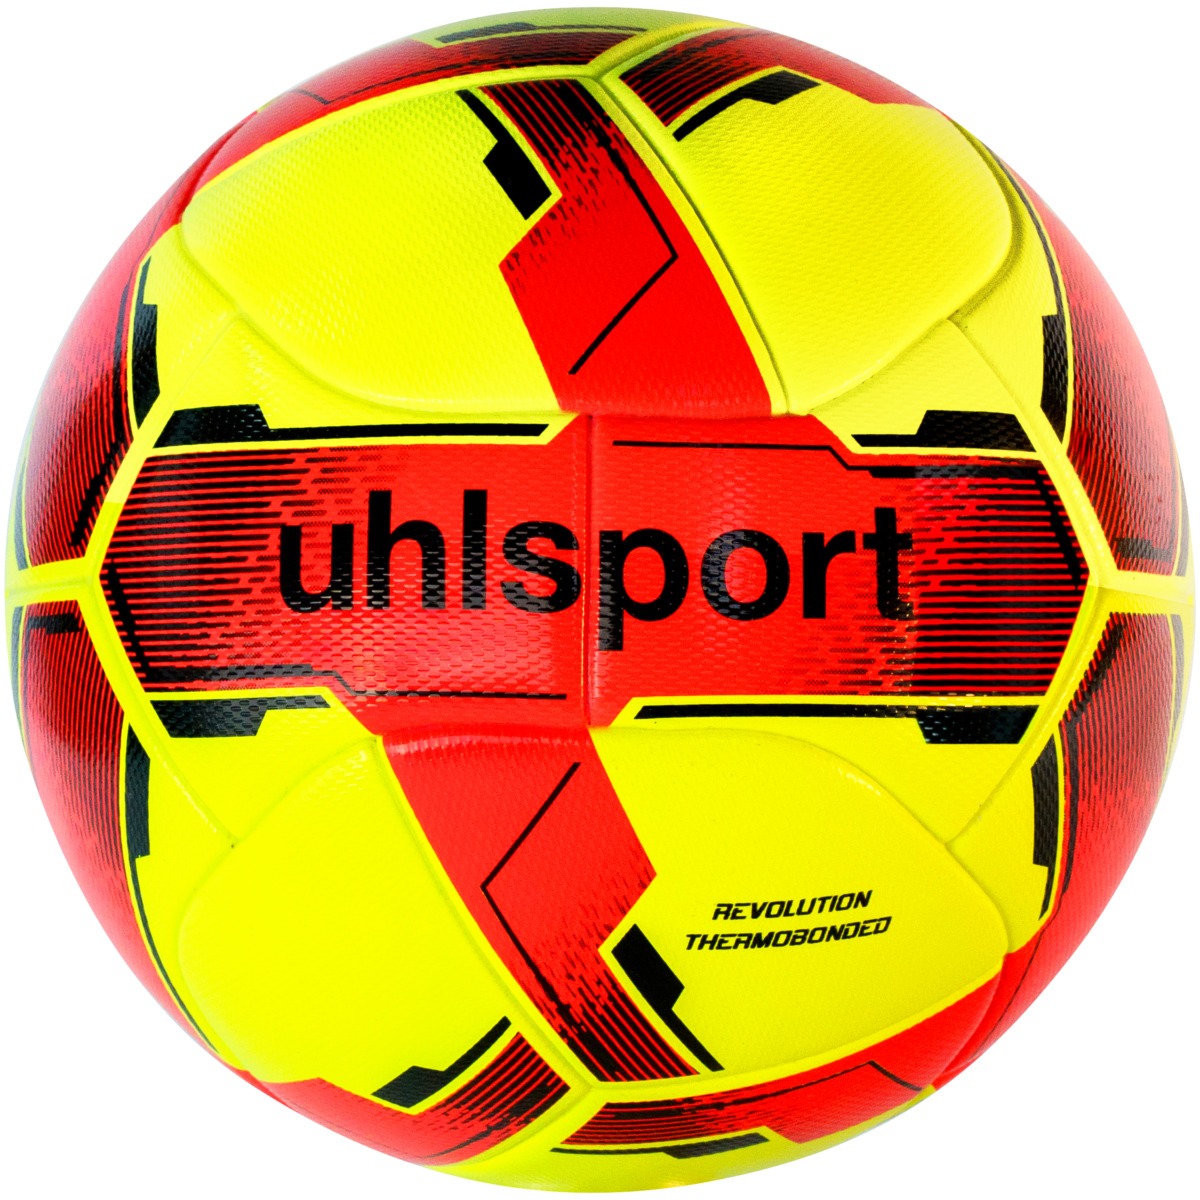  BALLON DE FOOTBALL REVOLUTION THERMOBONDED - UHLSPORT